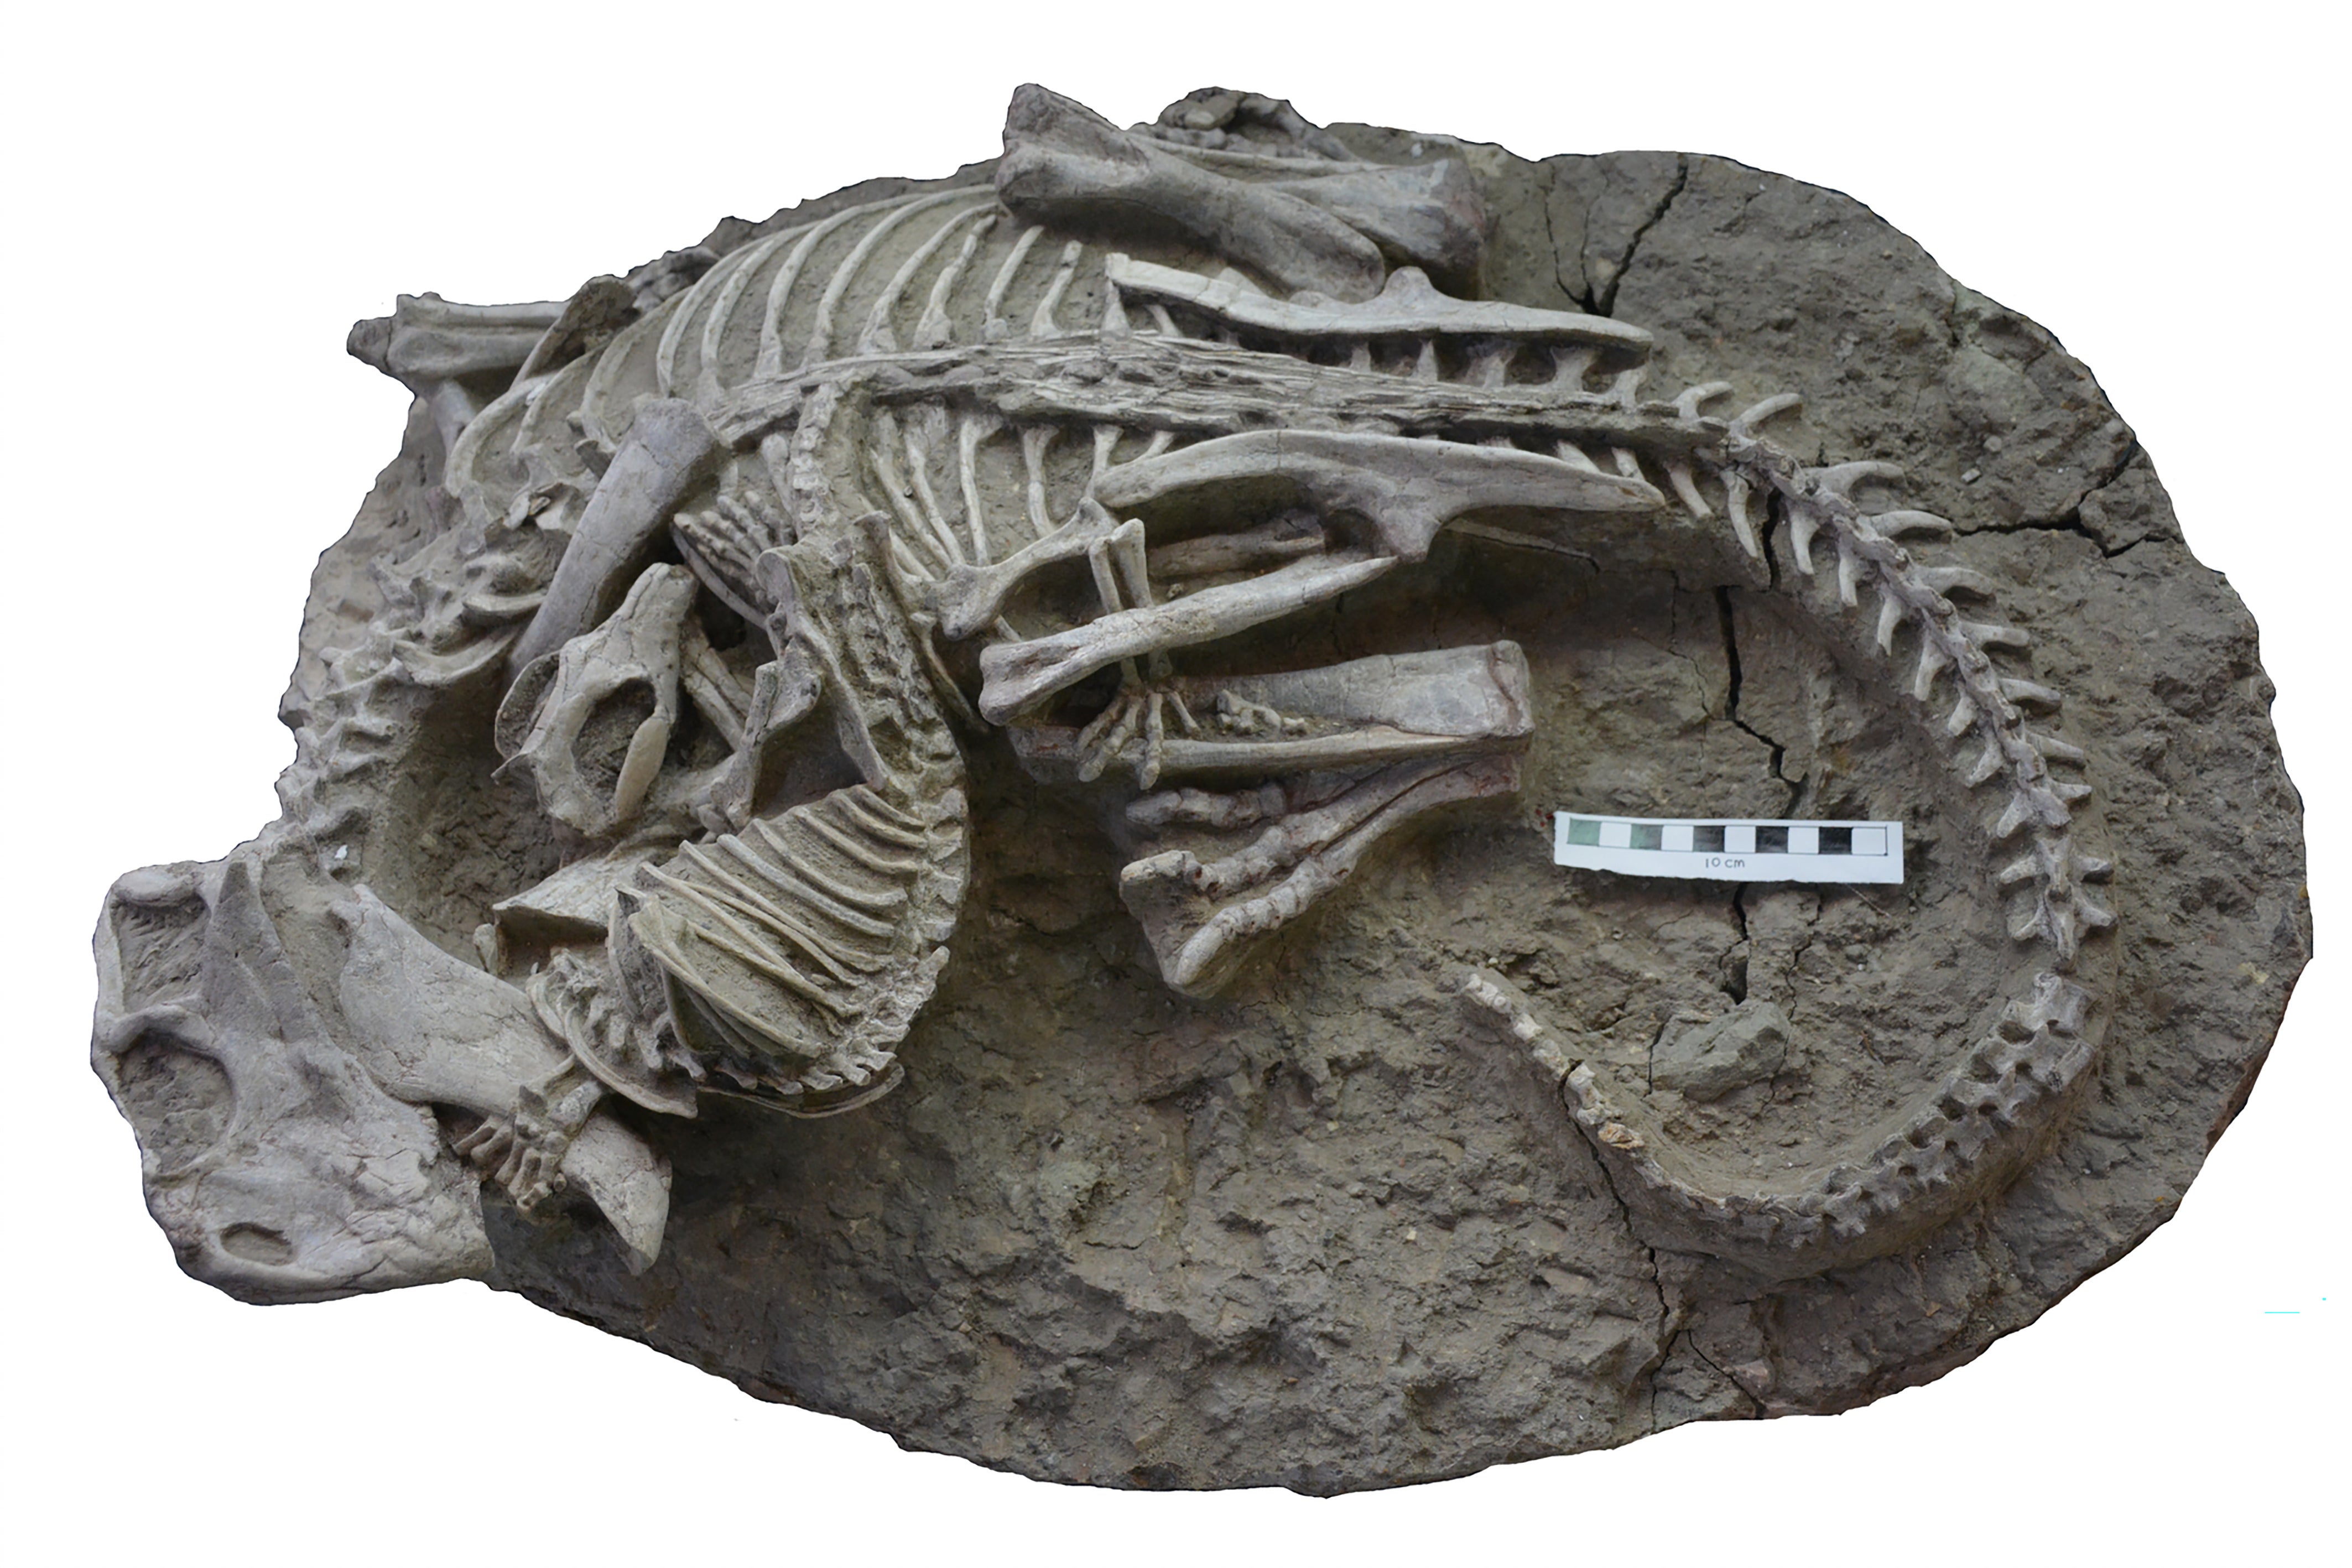 The Psittacosaurus being attacked by Repenomamus 125 million years ago